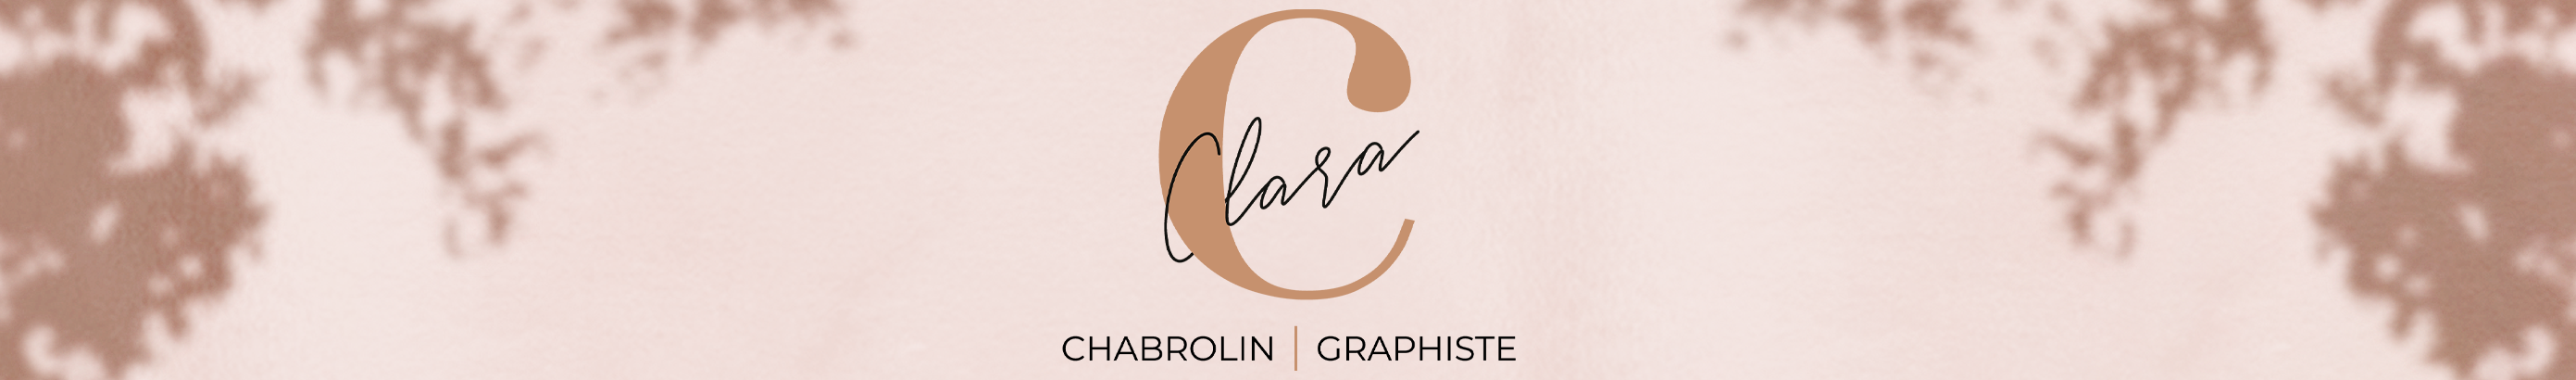 Bannière de profil de Clara Chabrolin